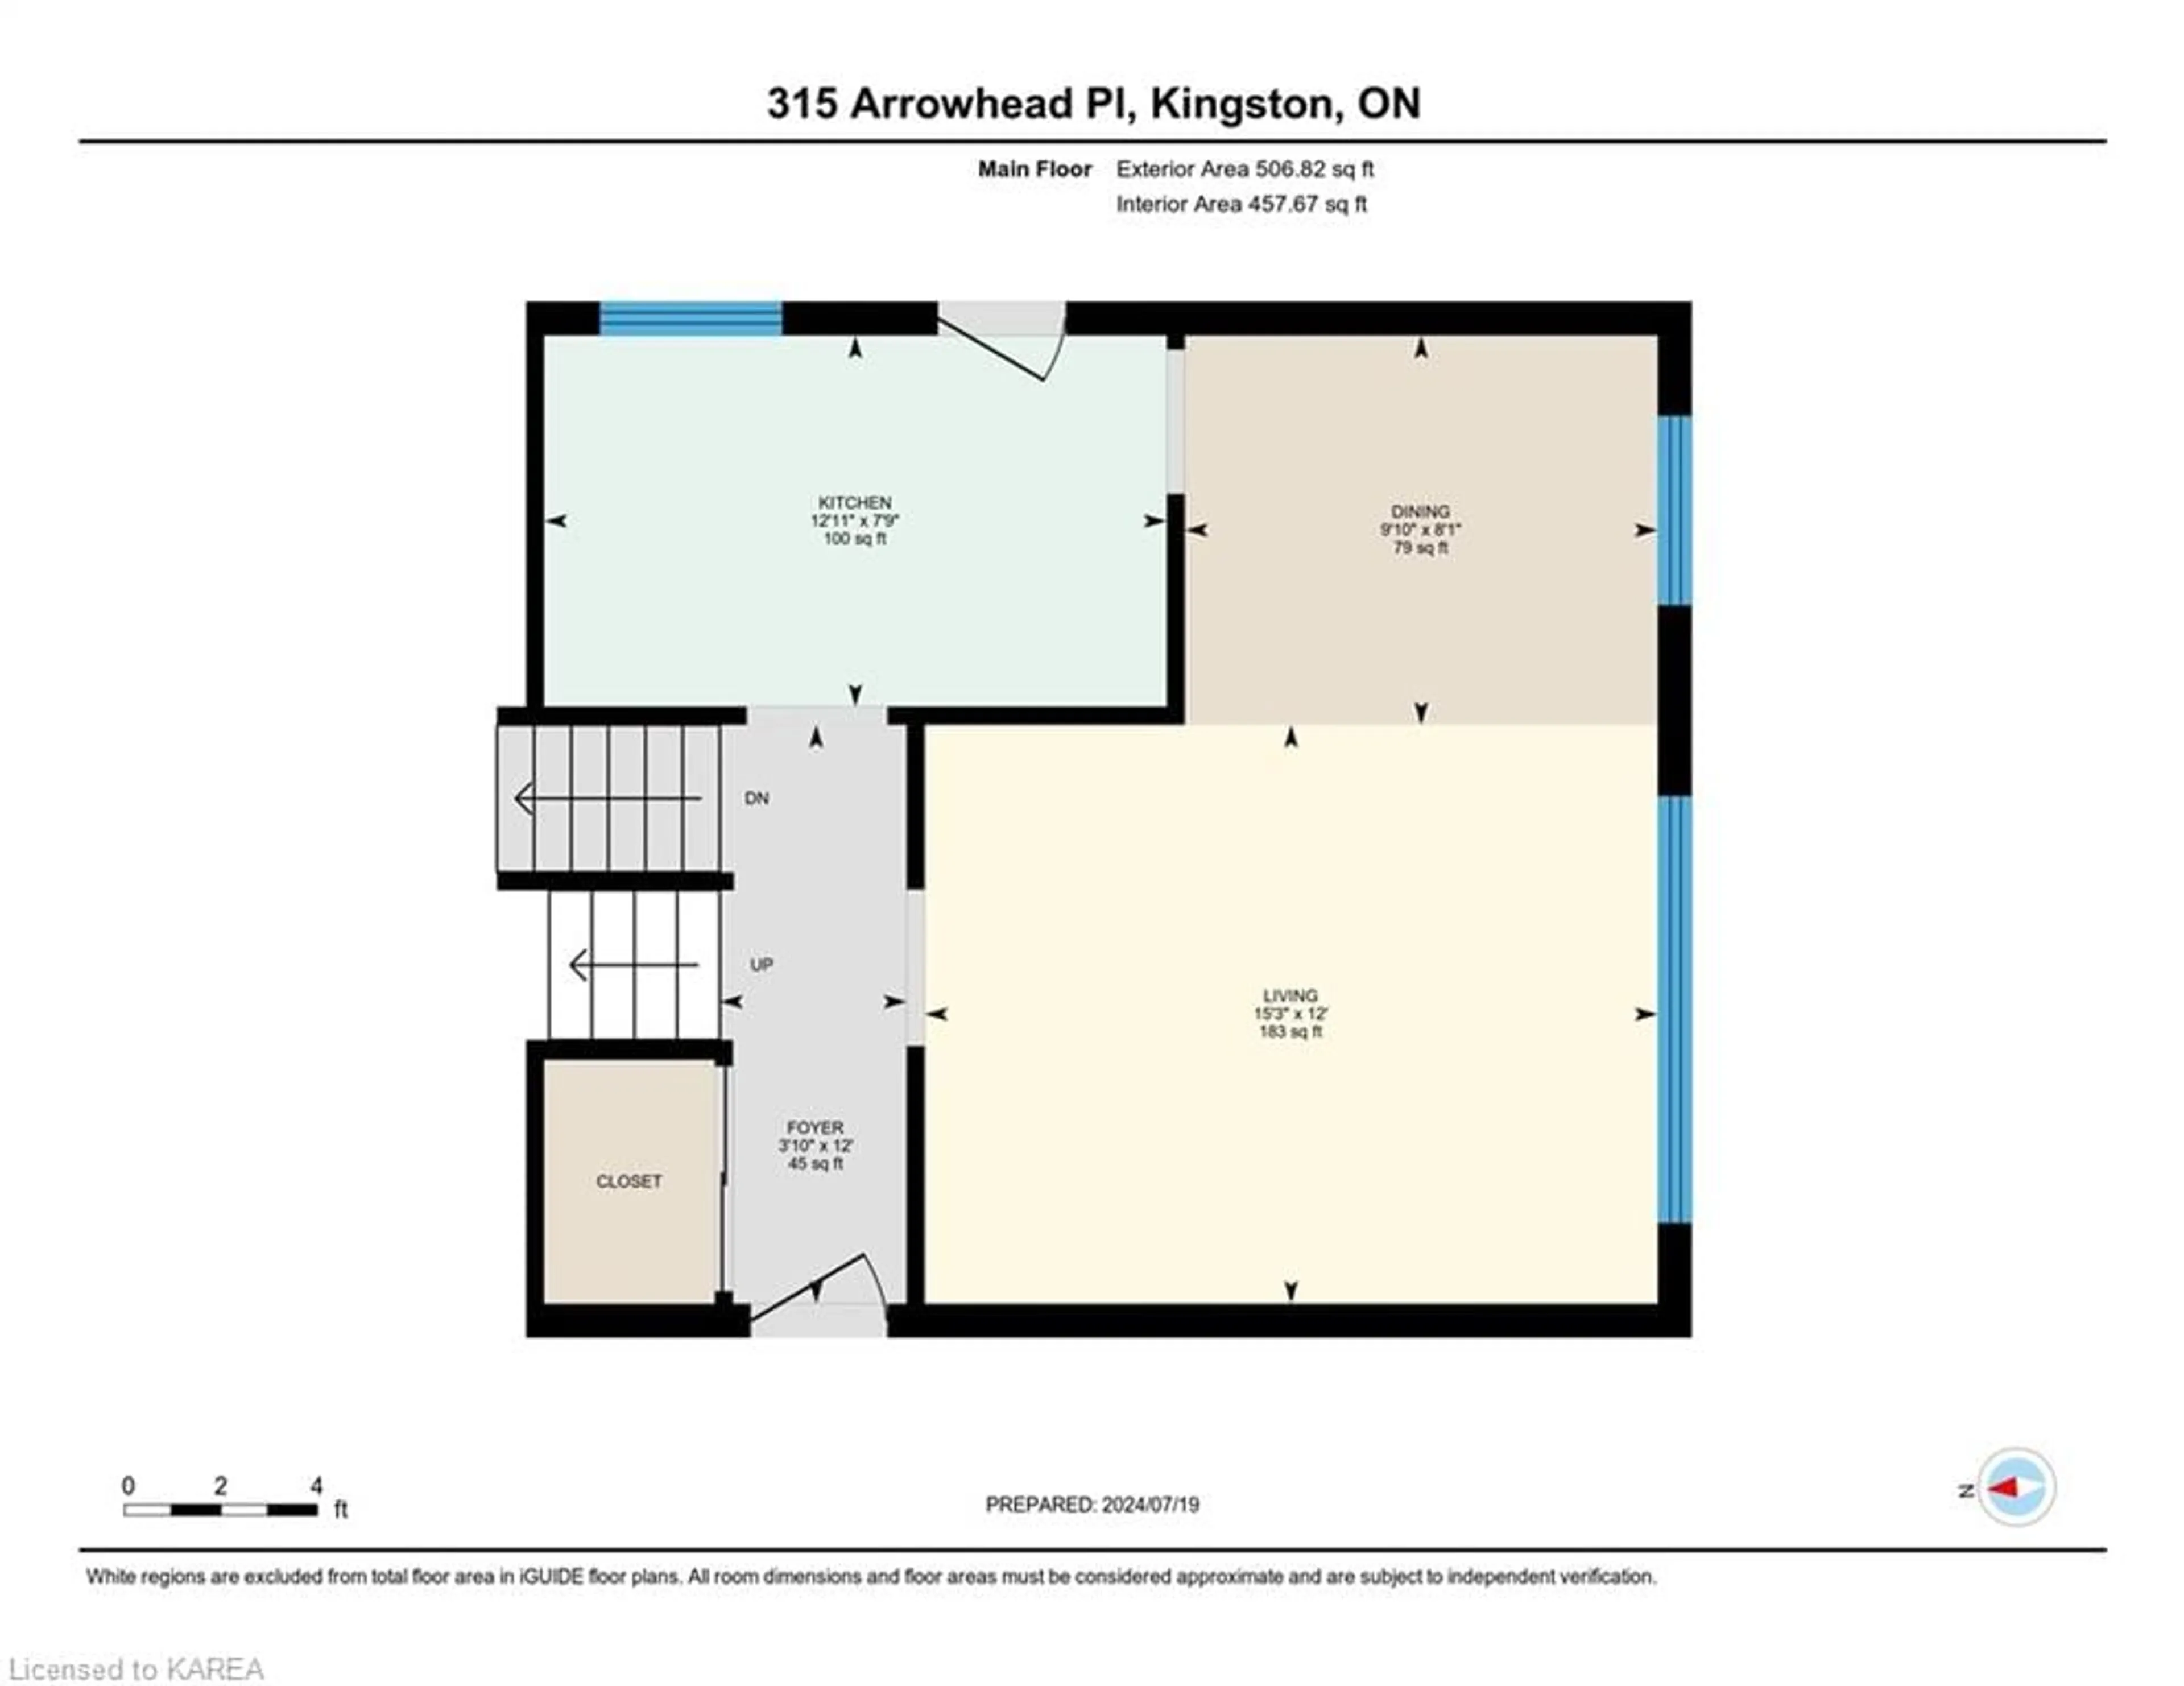 Floor plan for 315 Arrowhead Pl, Kingston Ontario K7M 3L4